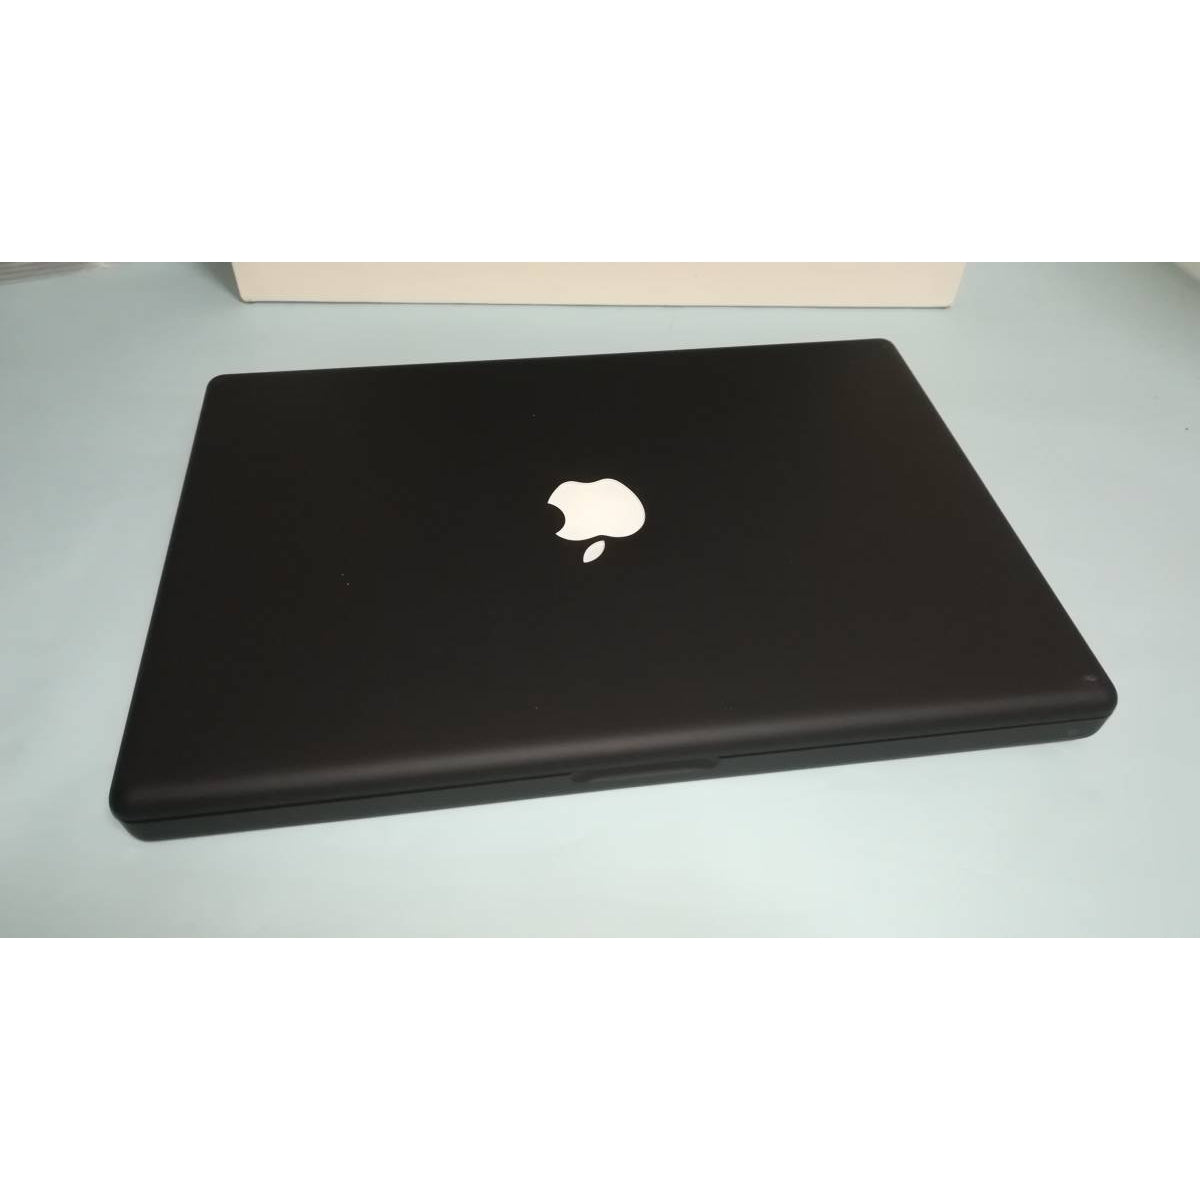 Apple MacBook 13-inch (Late 2006)